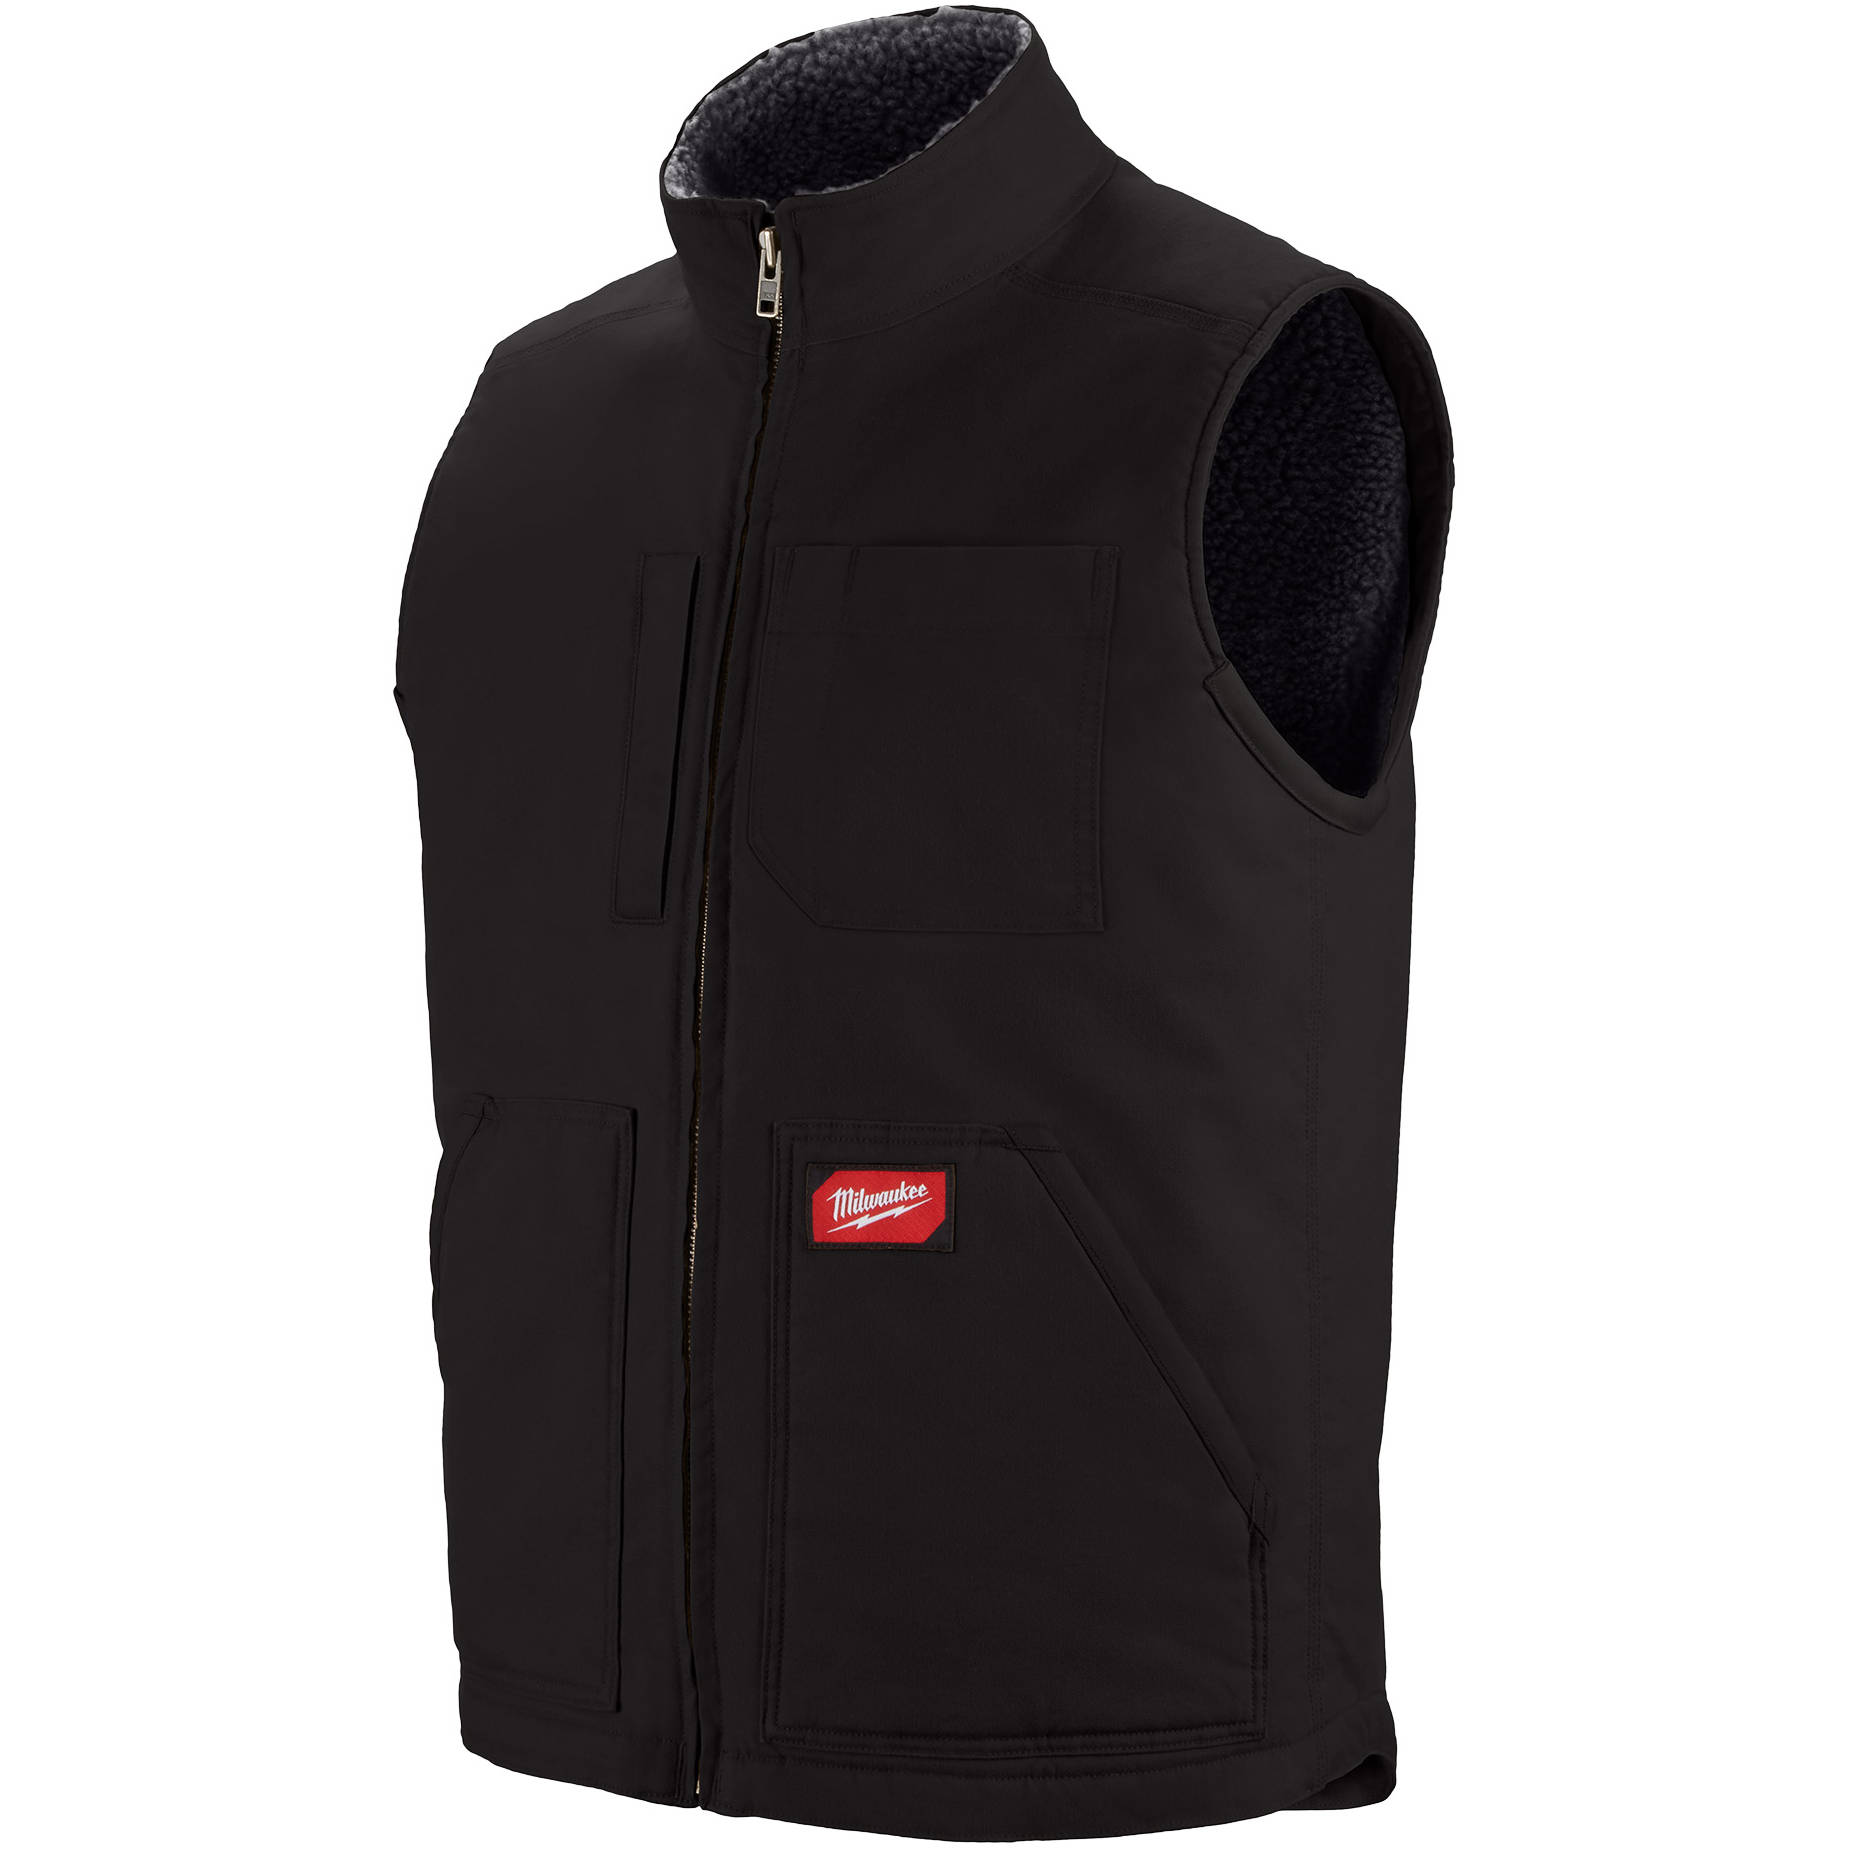 801B-L Milwaukee Heavy Duty Sherpa Lined Vest, Black, Large 3